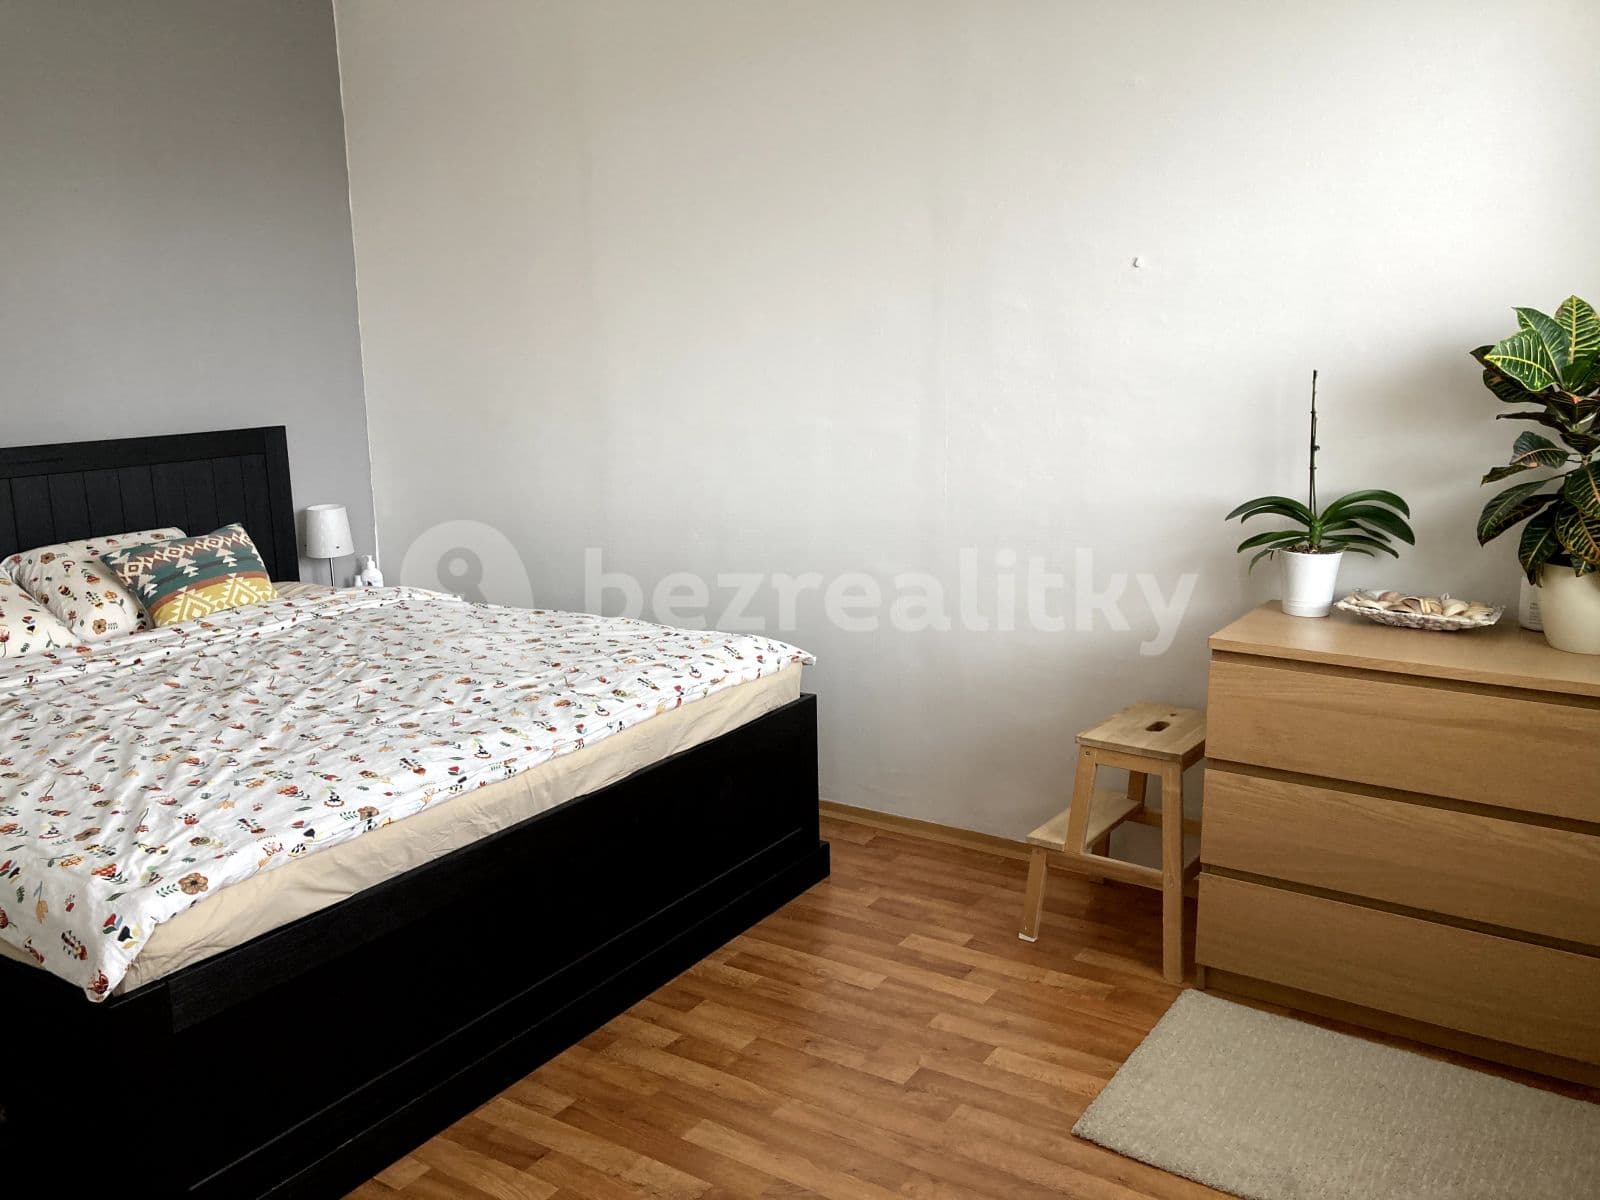 1 bedroom with open-plan kitchen flat to rent, 44 m², Střekovská, Prague, Prague